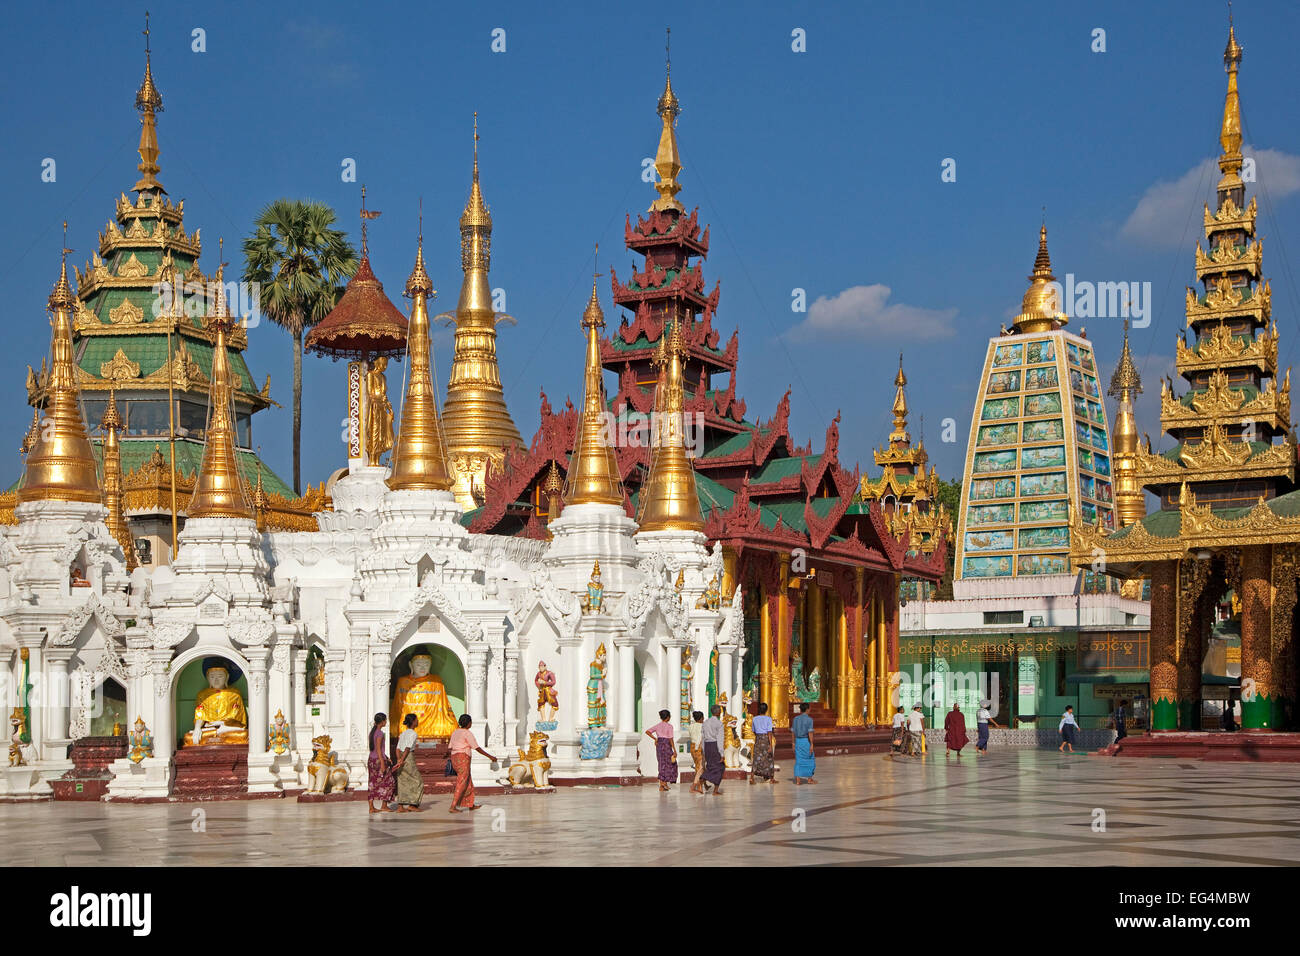 Di birmani i turisti che visitano la stupa dorato di Shwedagon Zedi Daw Pagoda di Yangon / Rangoon, Myanmar / Birmania Foto Stock